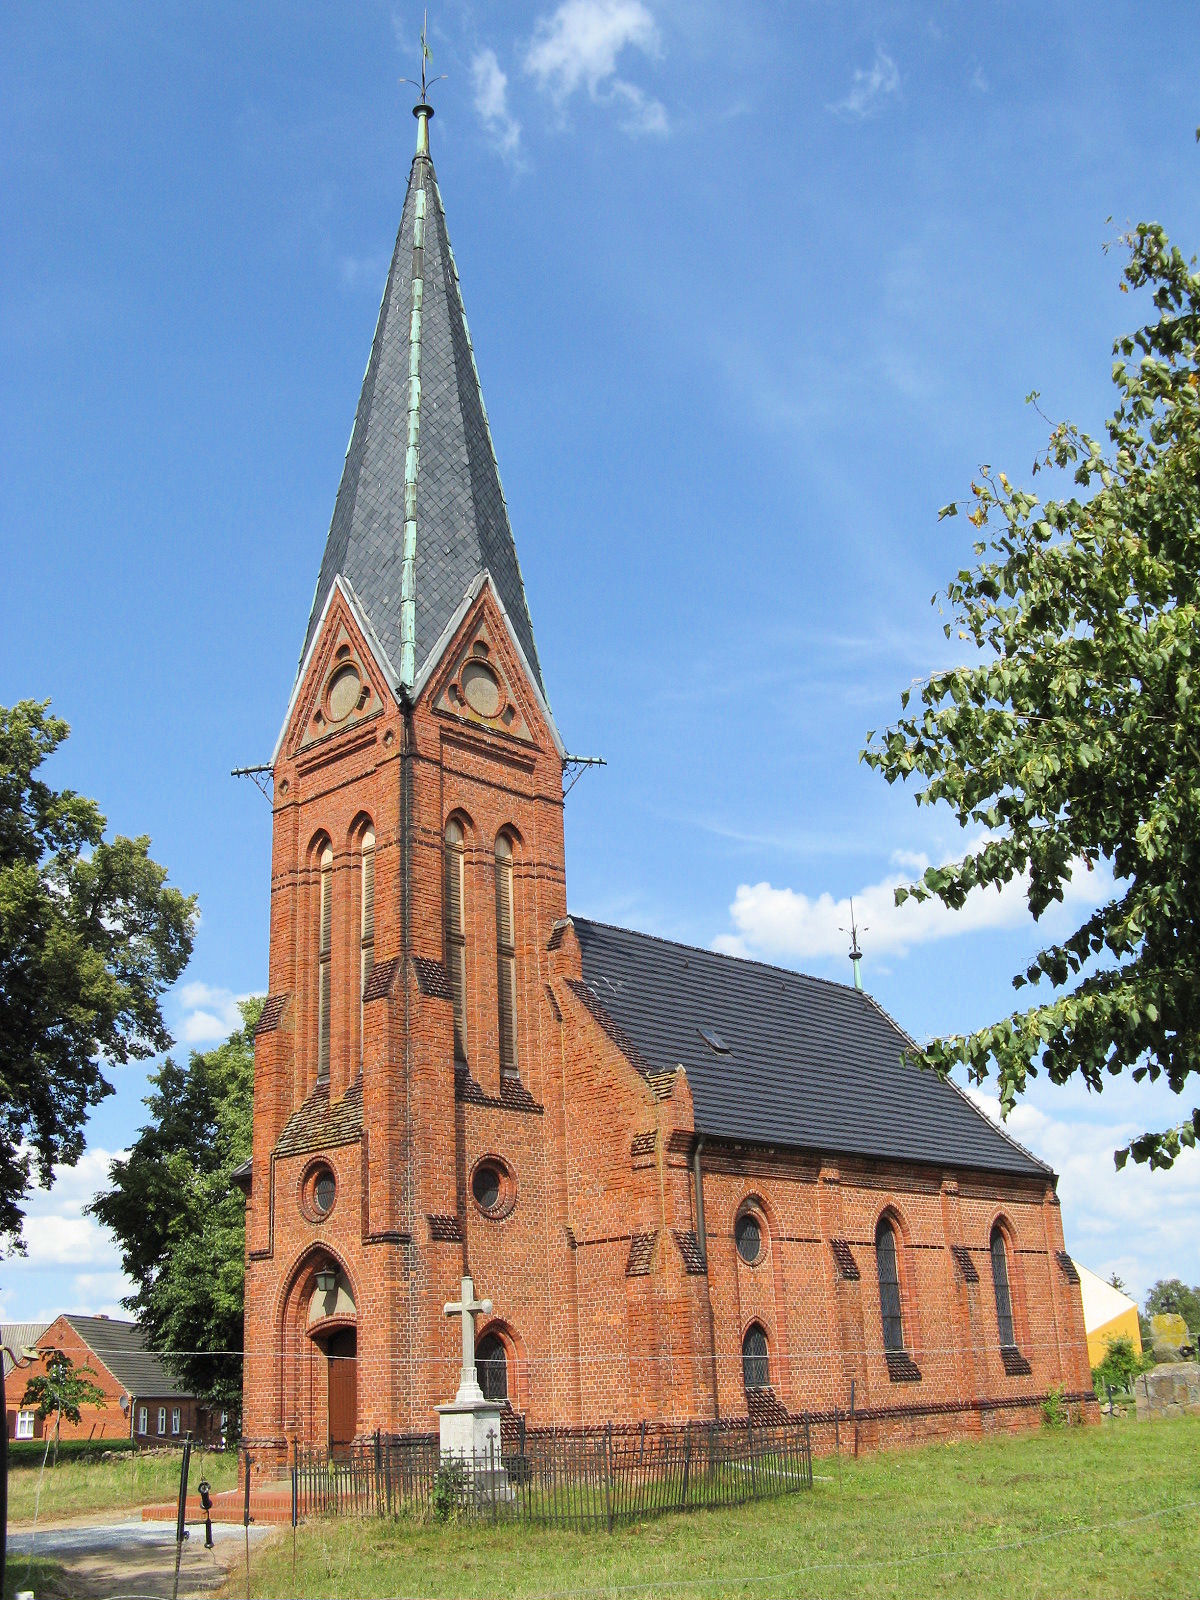 Von Niteshift (talk) - Kirche Grabow (Eigenes Werk (photo), CC BY-SA 3.0, https://commons.wikimedia.org/w/index.php?curid=7327491)